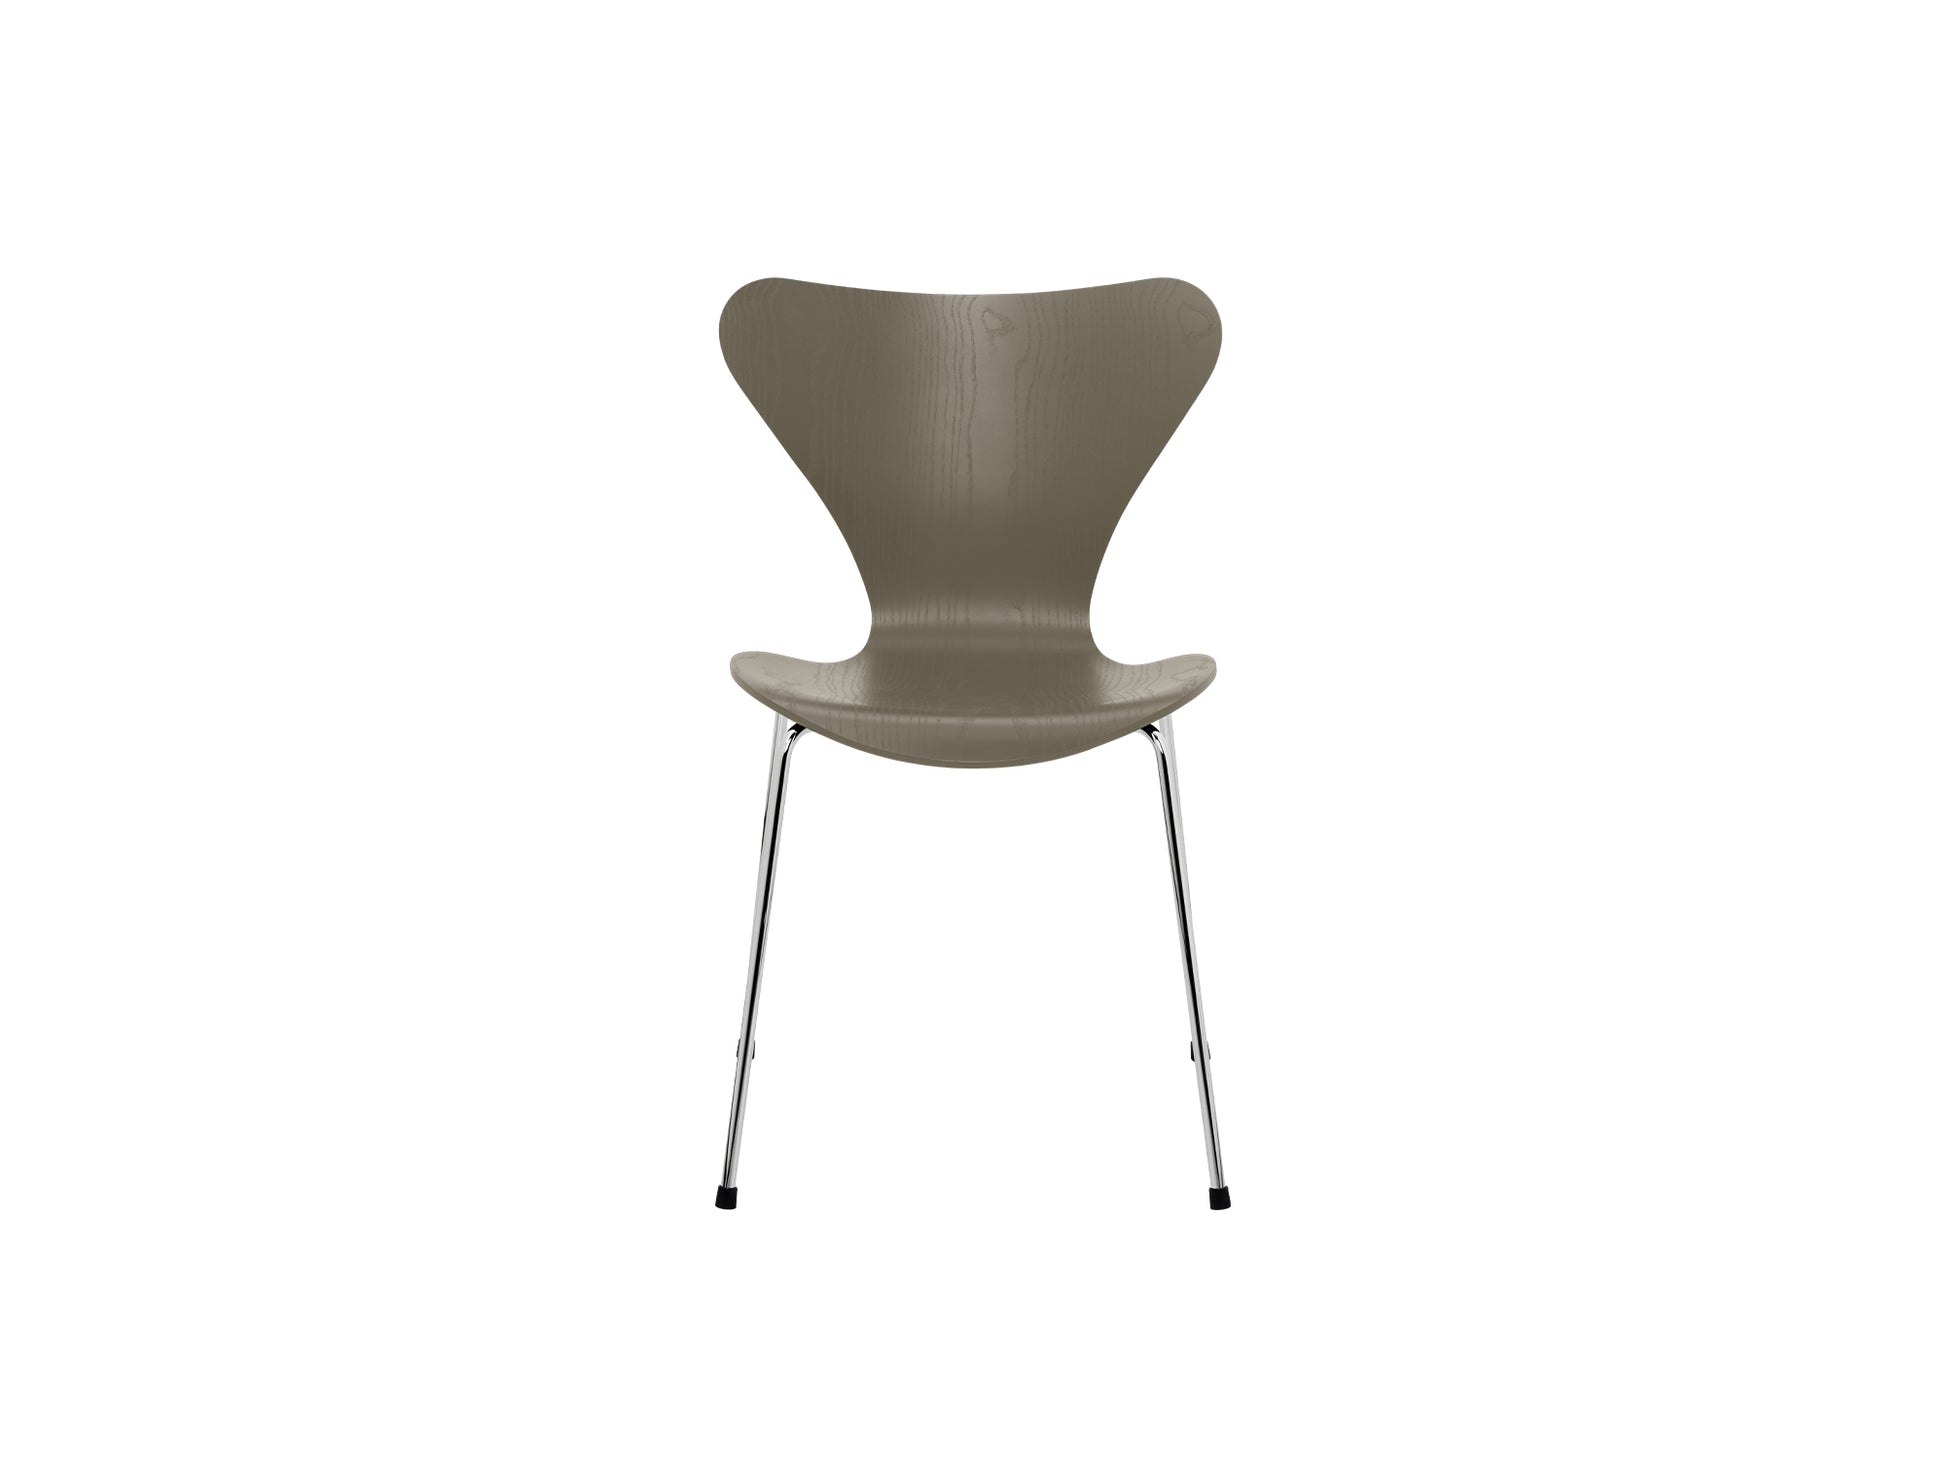 Series 7™ 3107 Dining Chair by Fritz Hansen - Olive Green Coloured Ash Veneer Shell / Chromed Steel